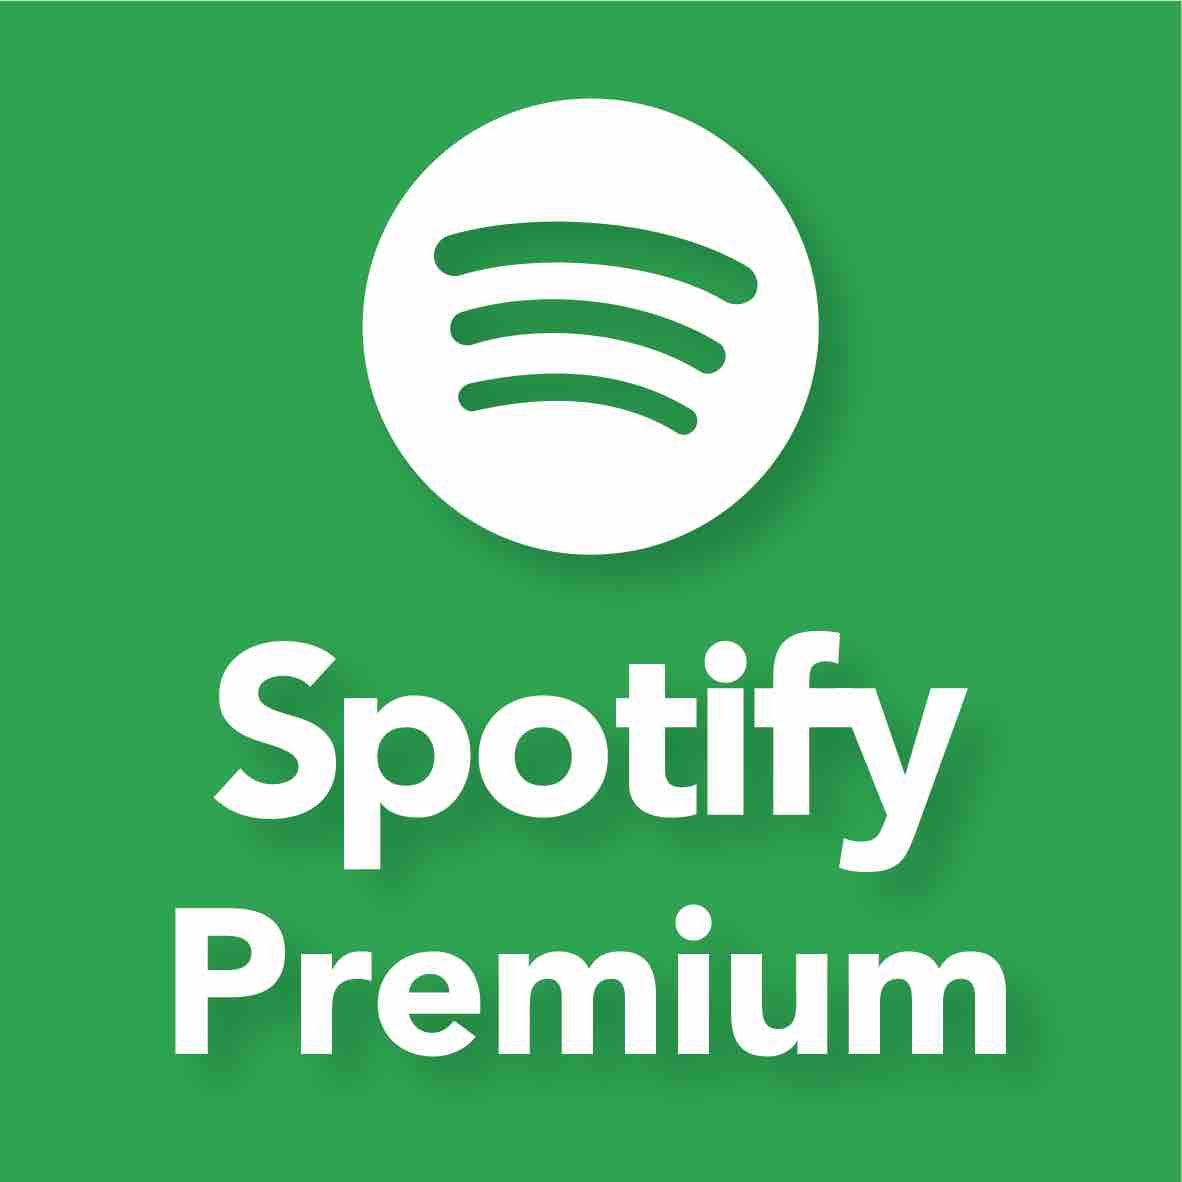 spotify premium高级会员季付个人独享账号